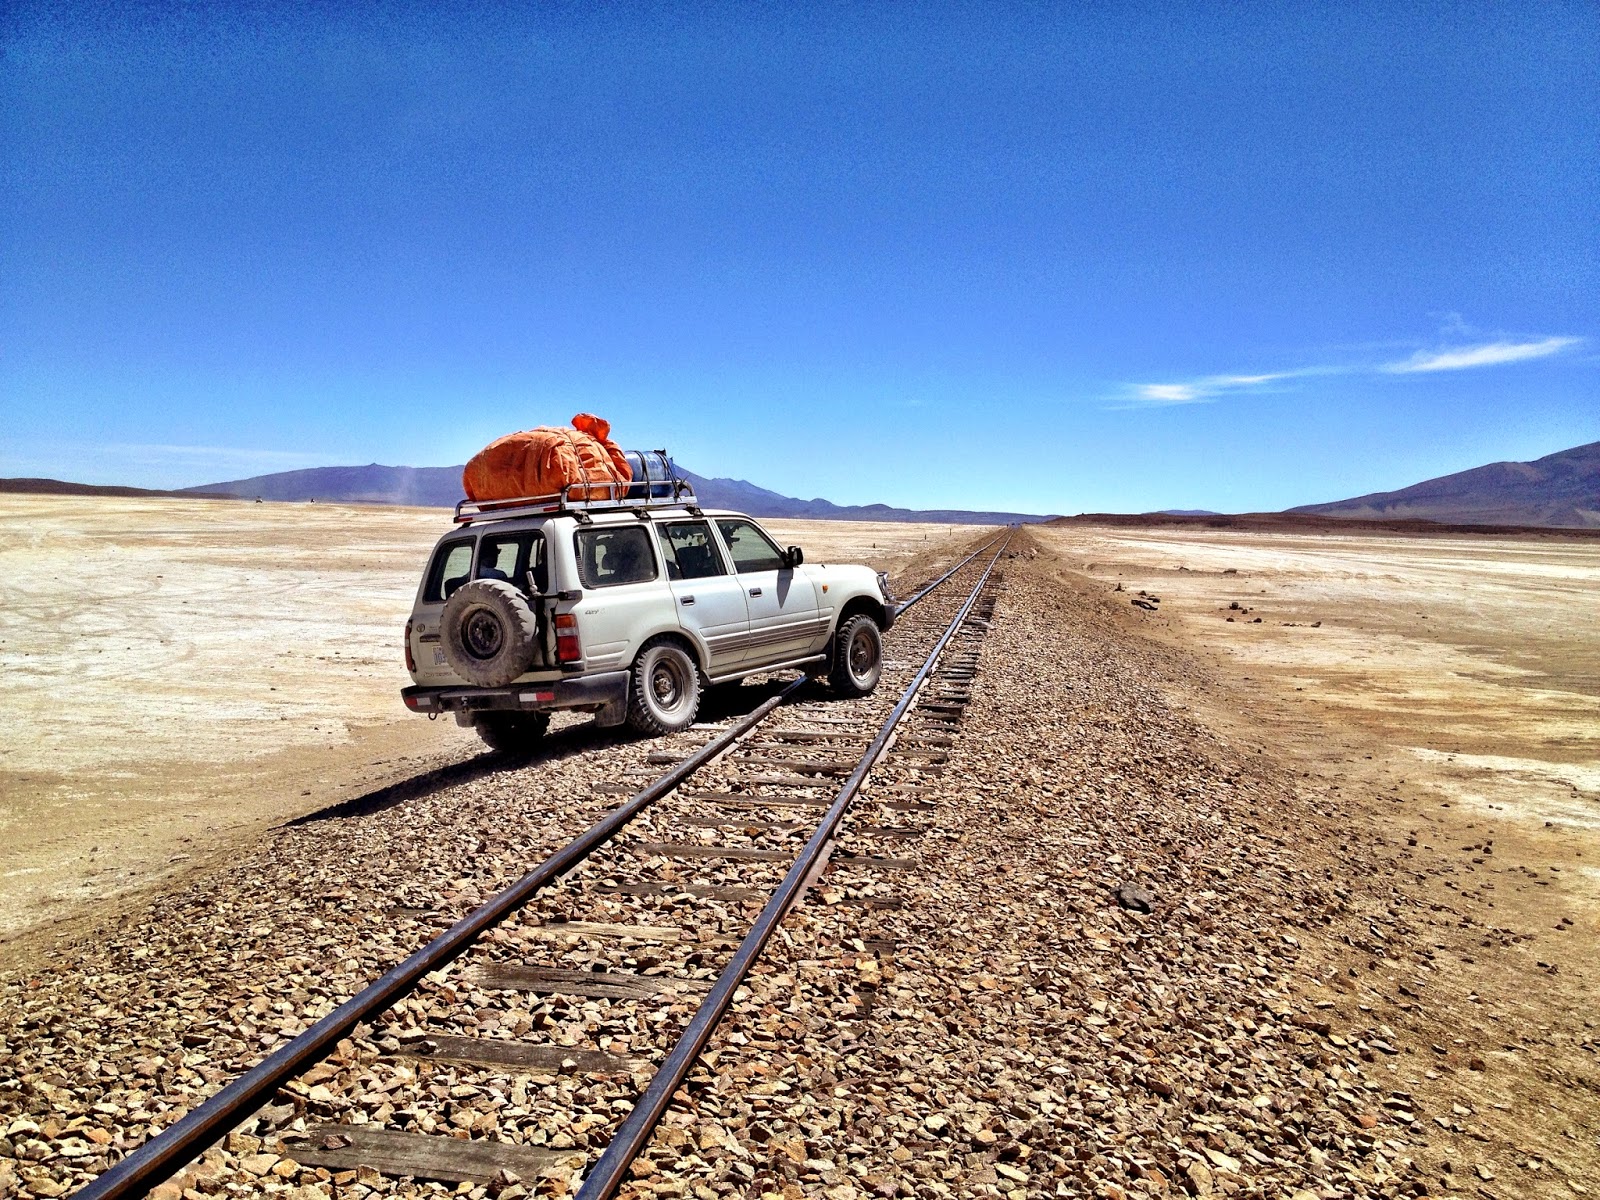 Crossing a train track in the Uyuni desert